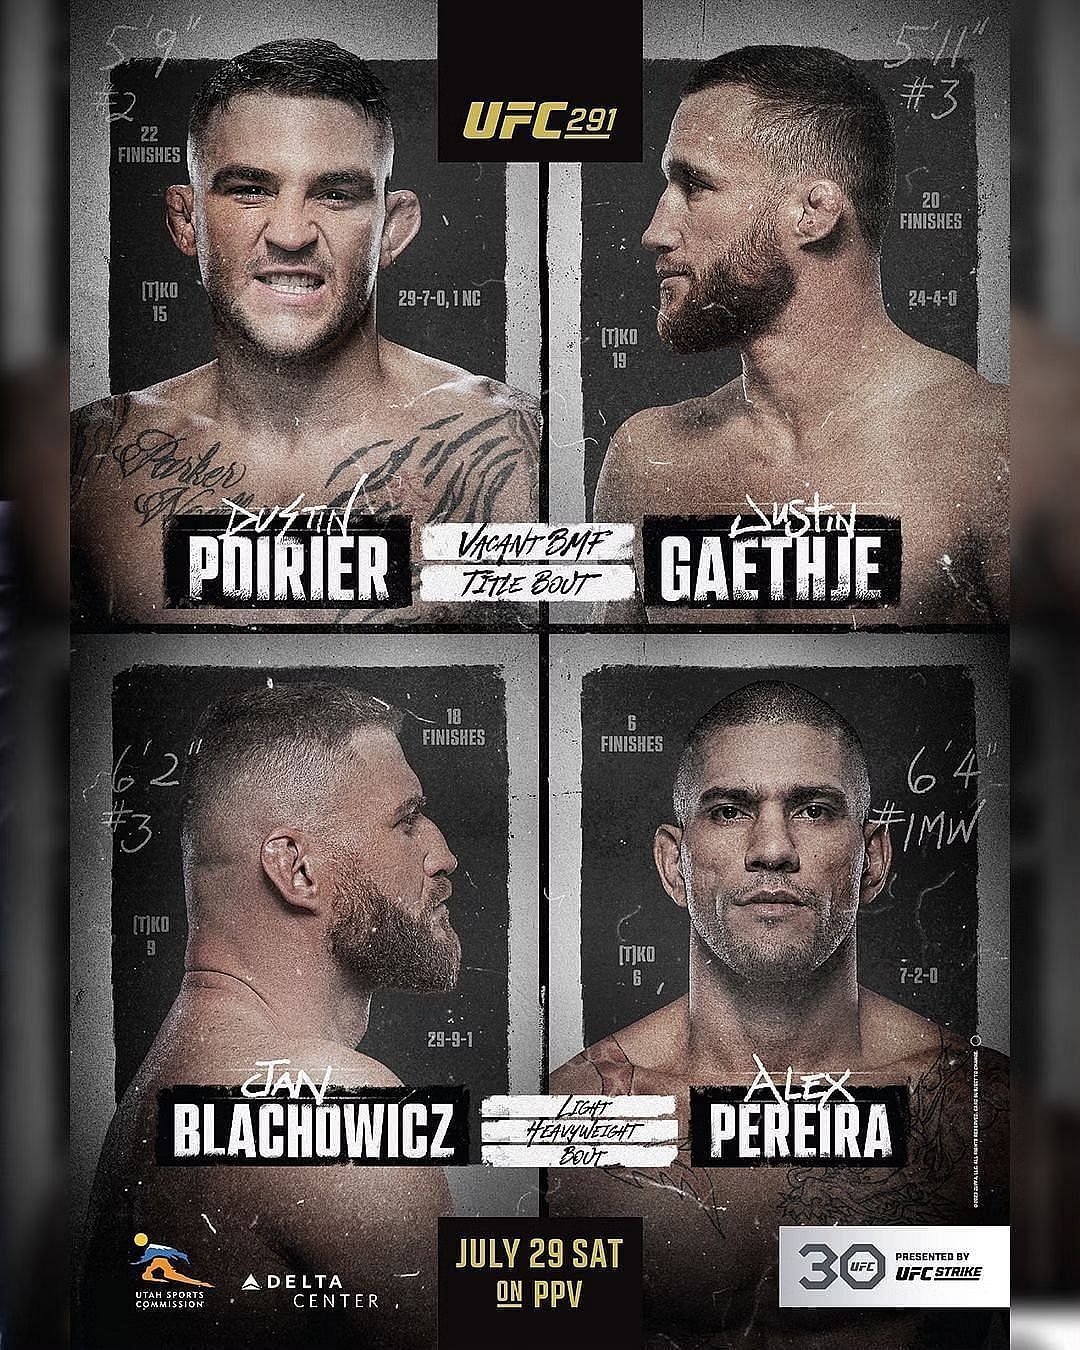 UFC 291: Poirier vs. Gaethje 2 [Image Credit: twitter.com/ufc]